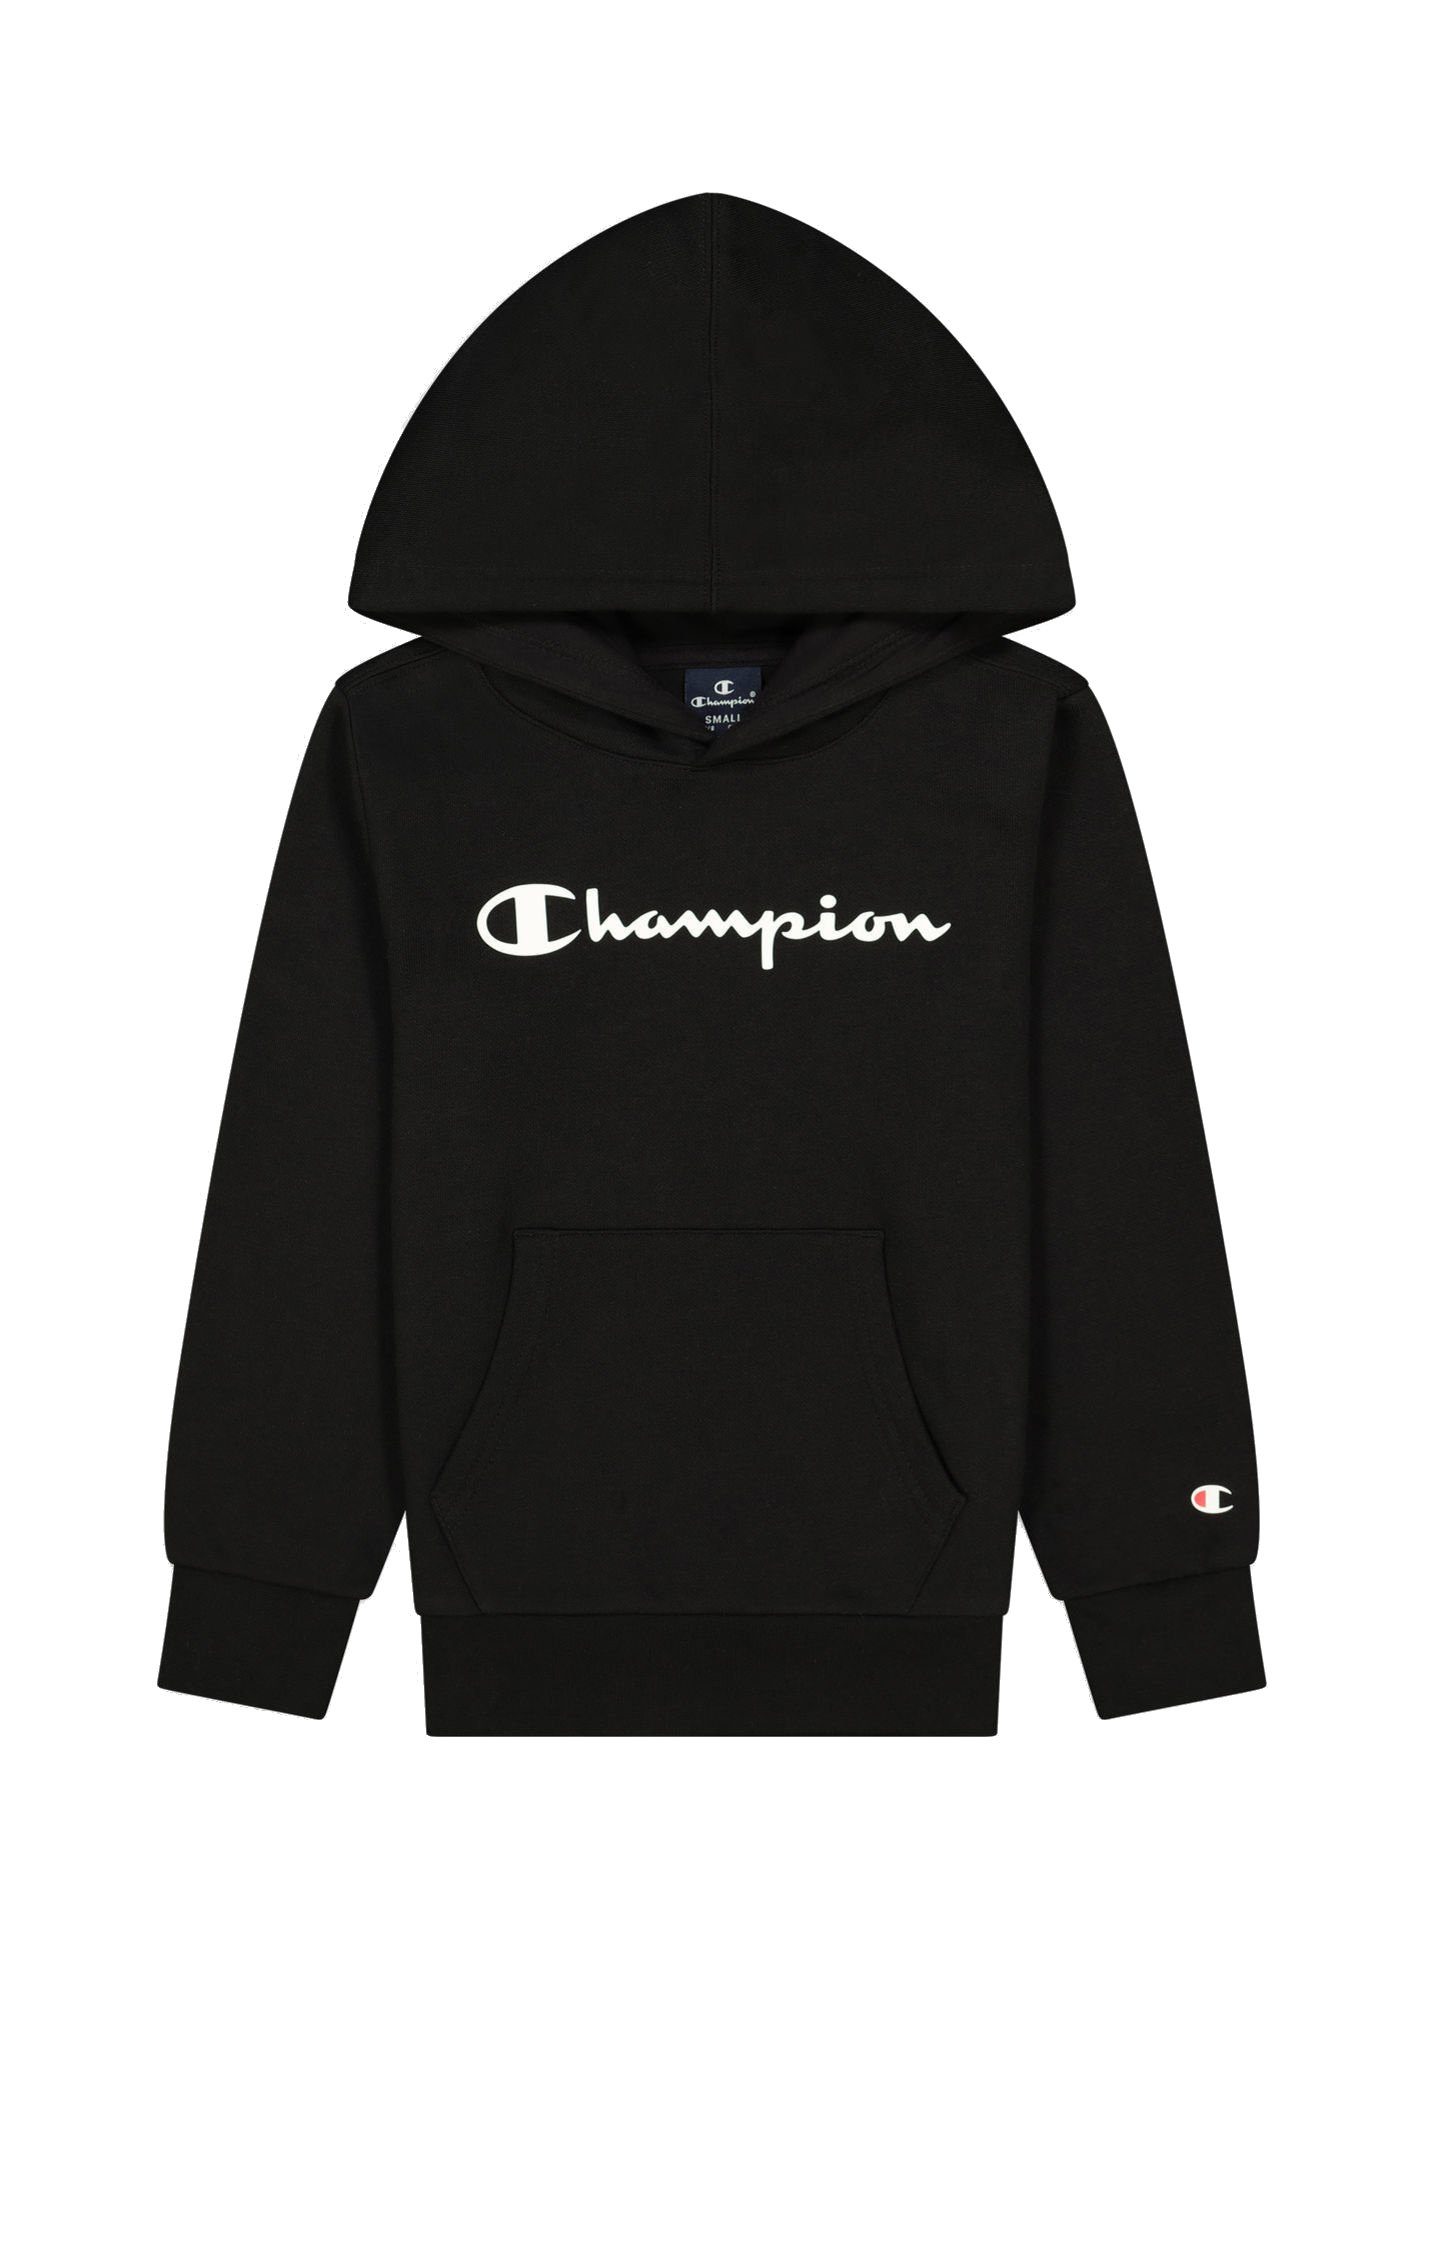 Champion Hoodie Champion Kinder (nbk) Hooded Sweatshirt schwarz 305358 Kapuzenpullover